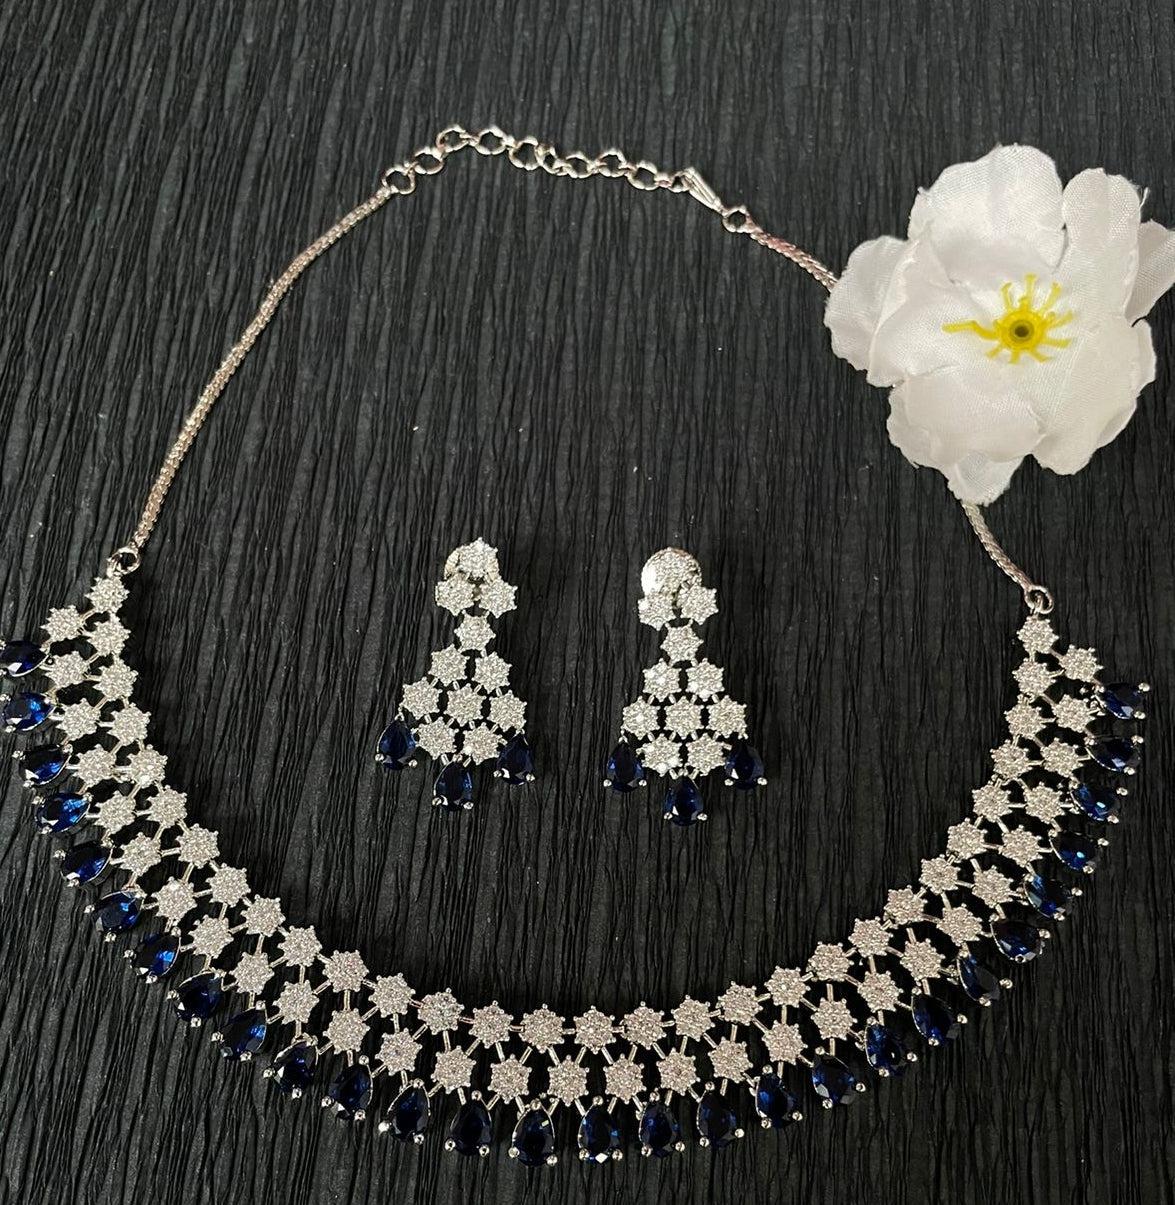 Premium Sayara Collection Two line star Necklace with Blue CZ Stones 8739N-Necklace Set-season end sale item-Griiham